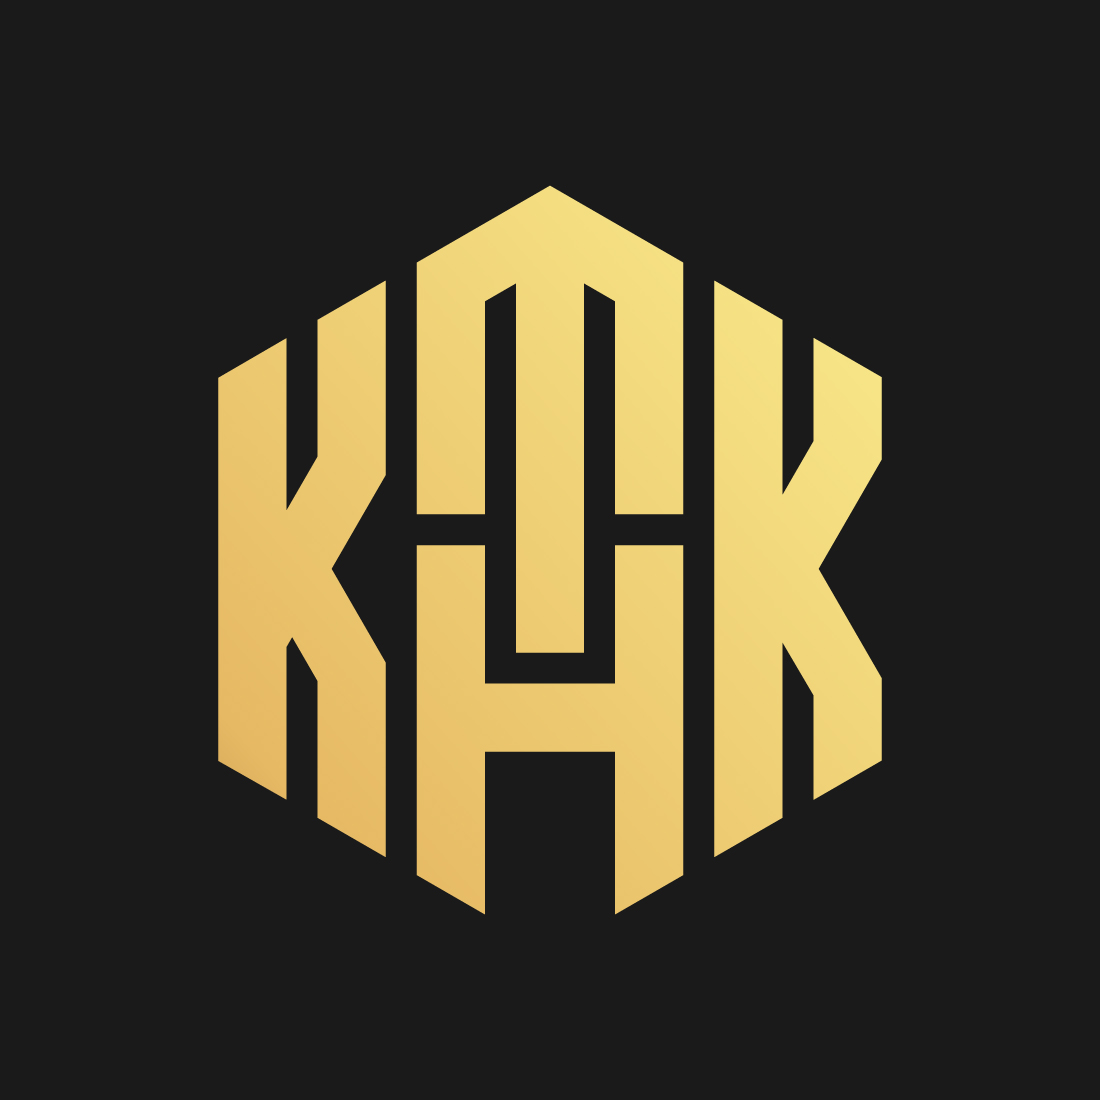 KTHK logo design preview image.